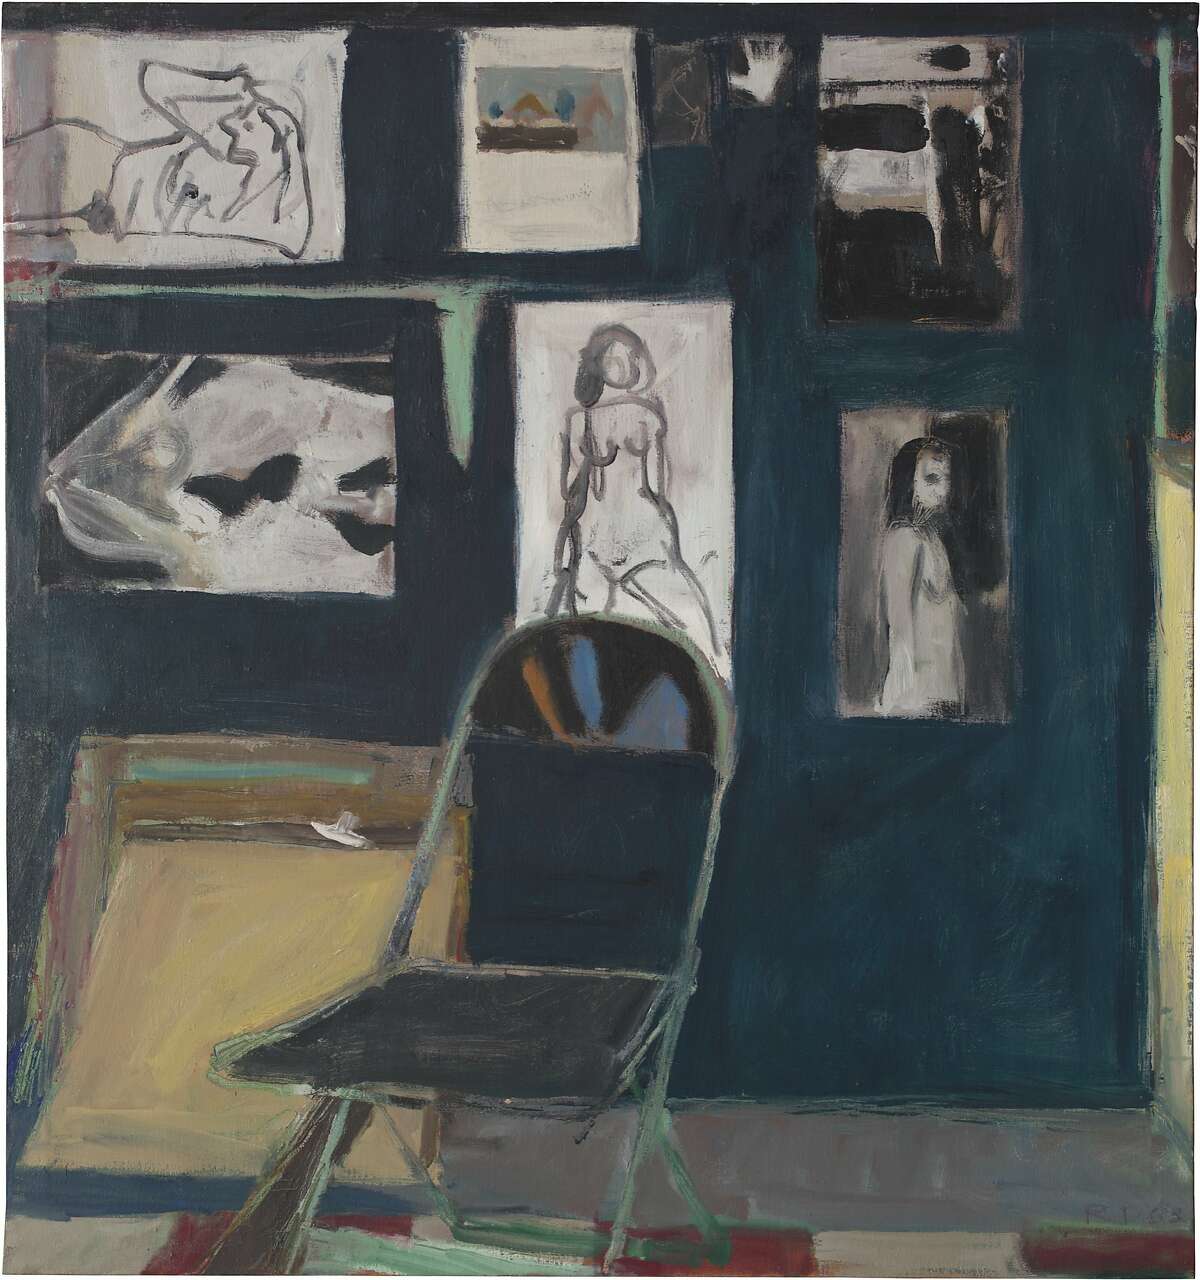 Richard Diebenkorn, "Studio Wall" (1963)